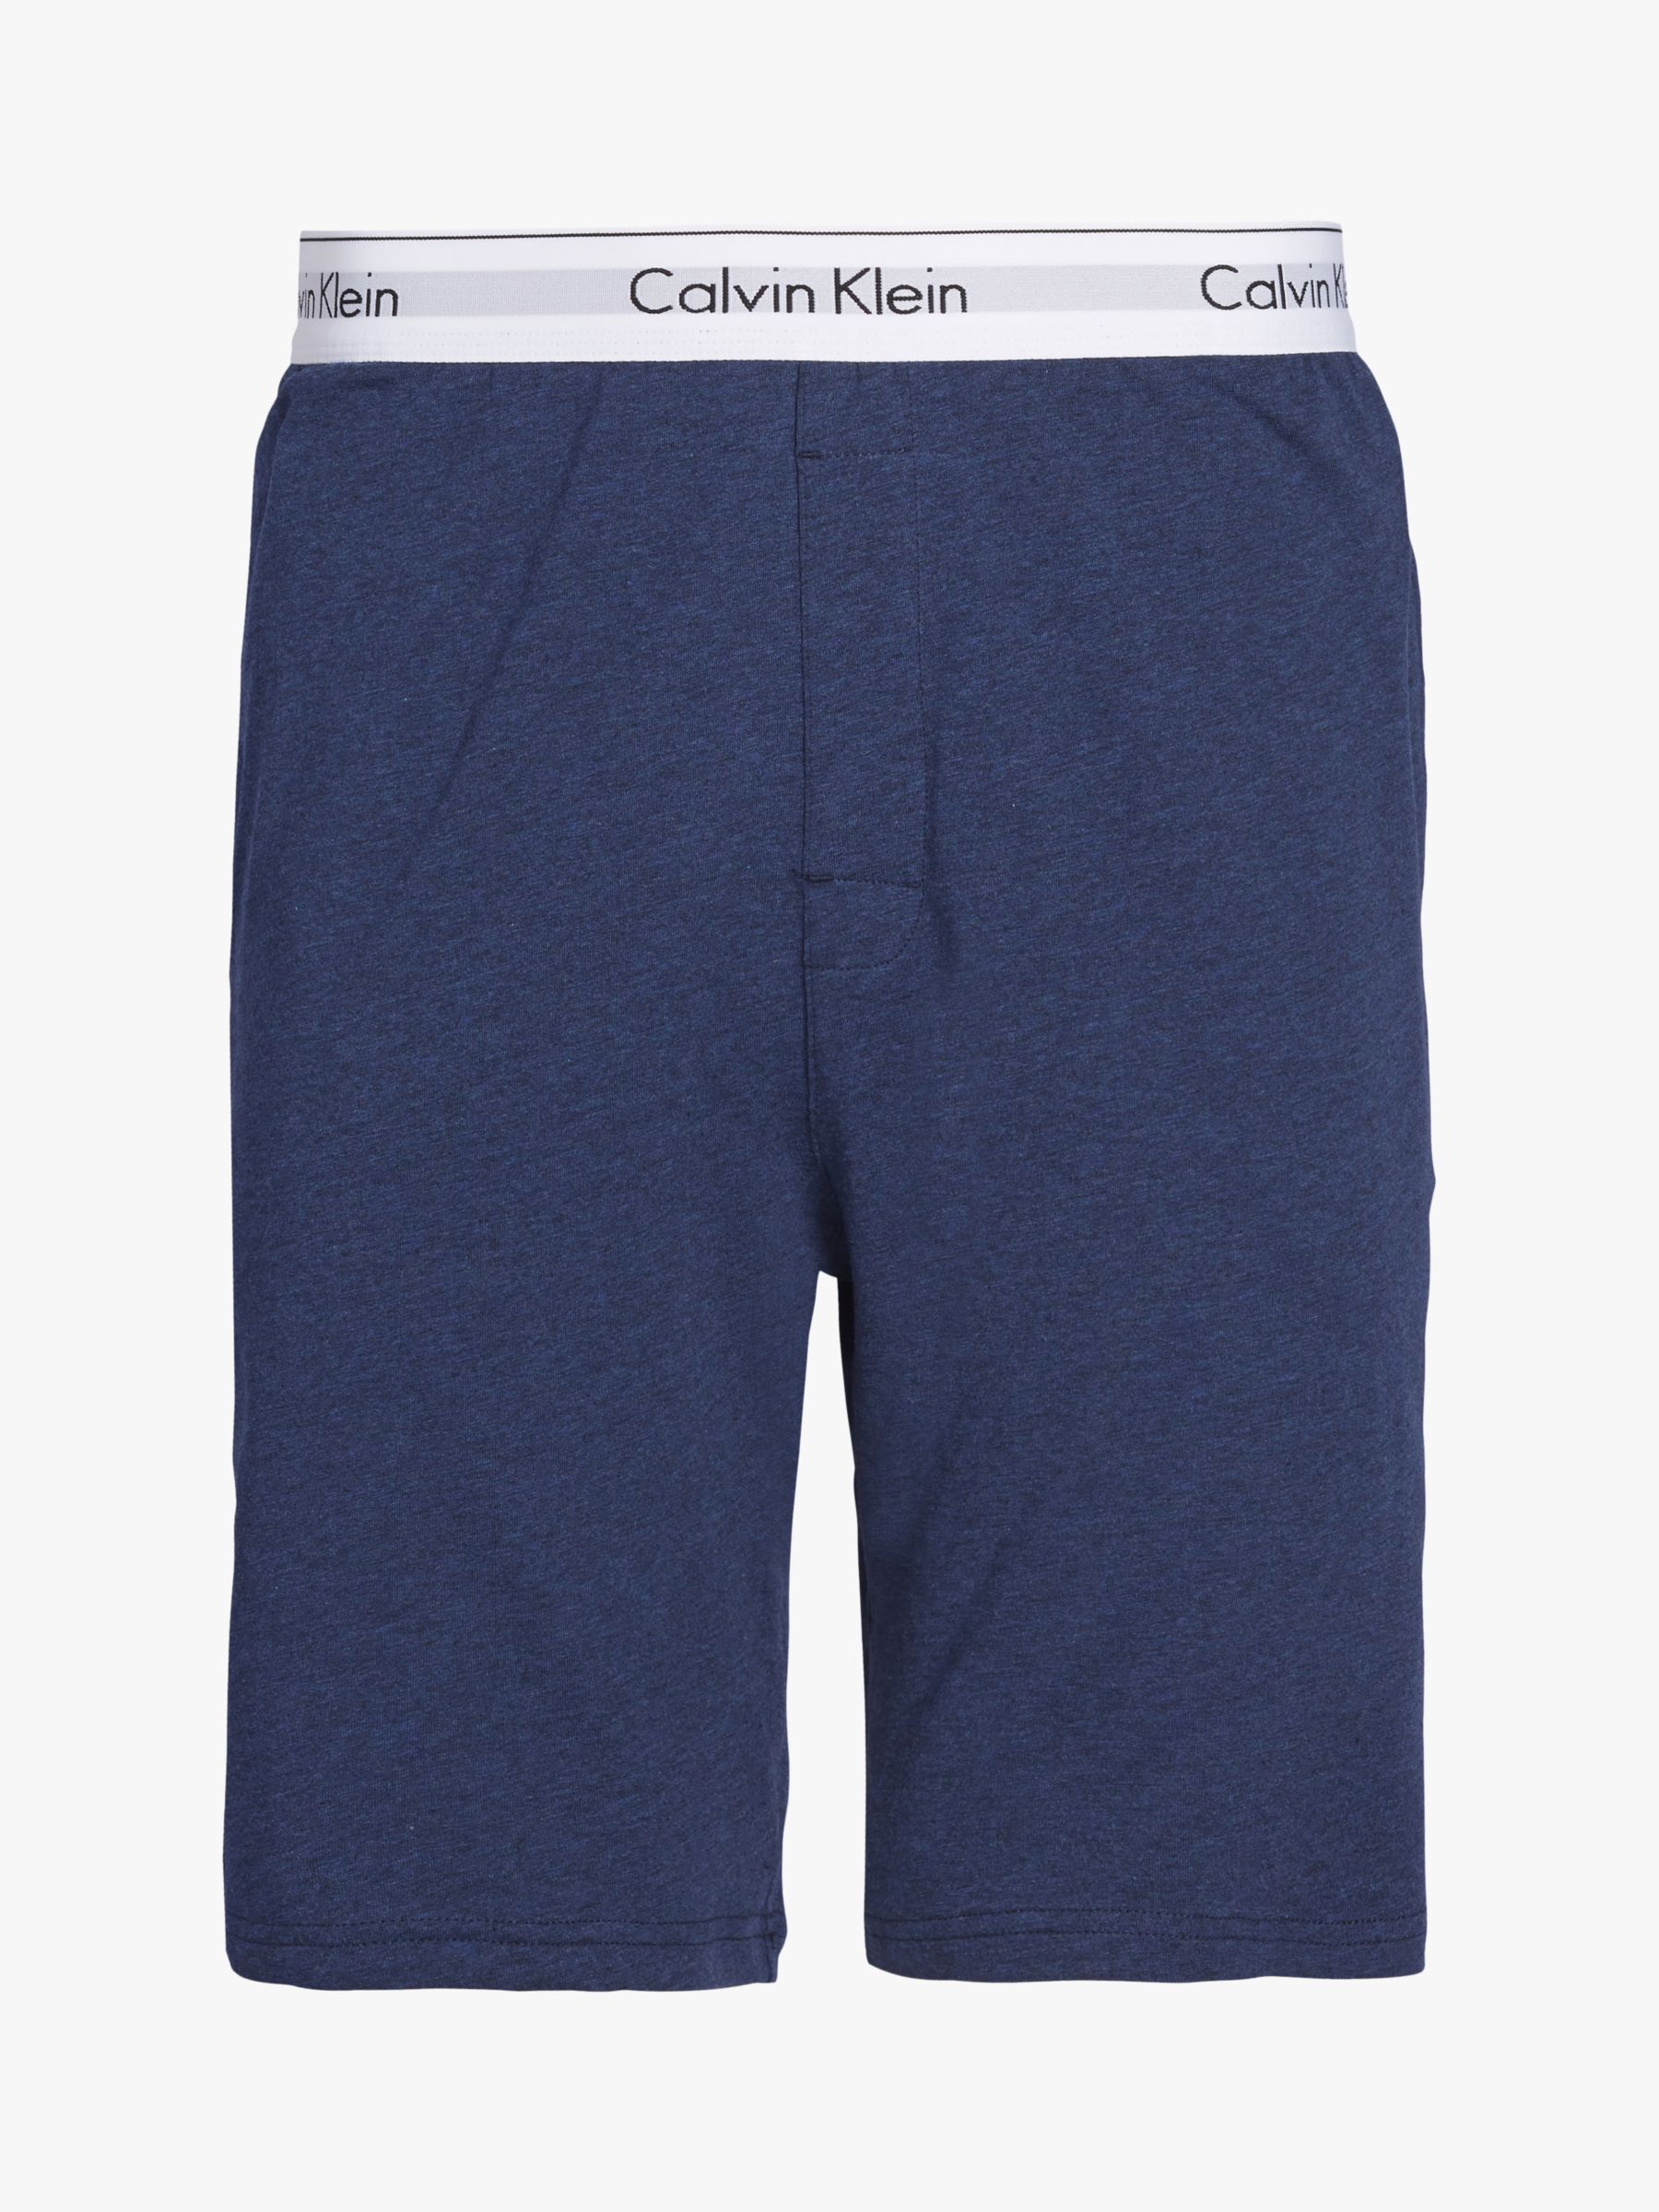 calvin klein modern lounge shorts